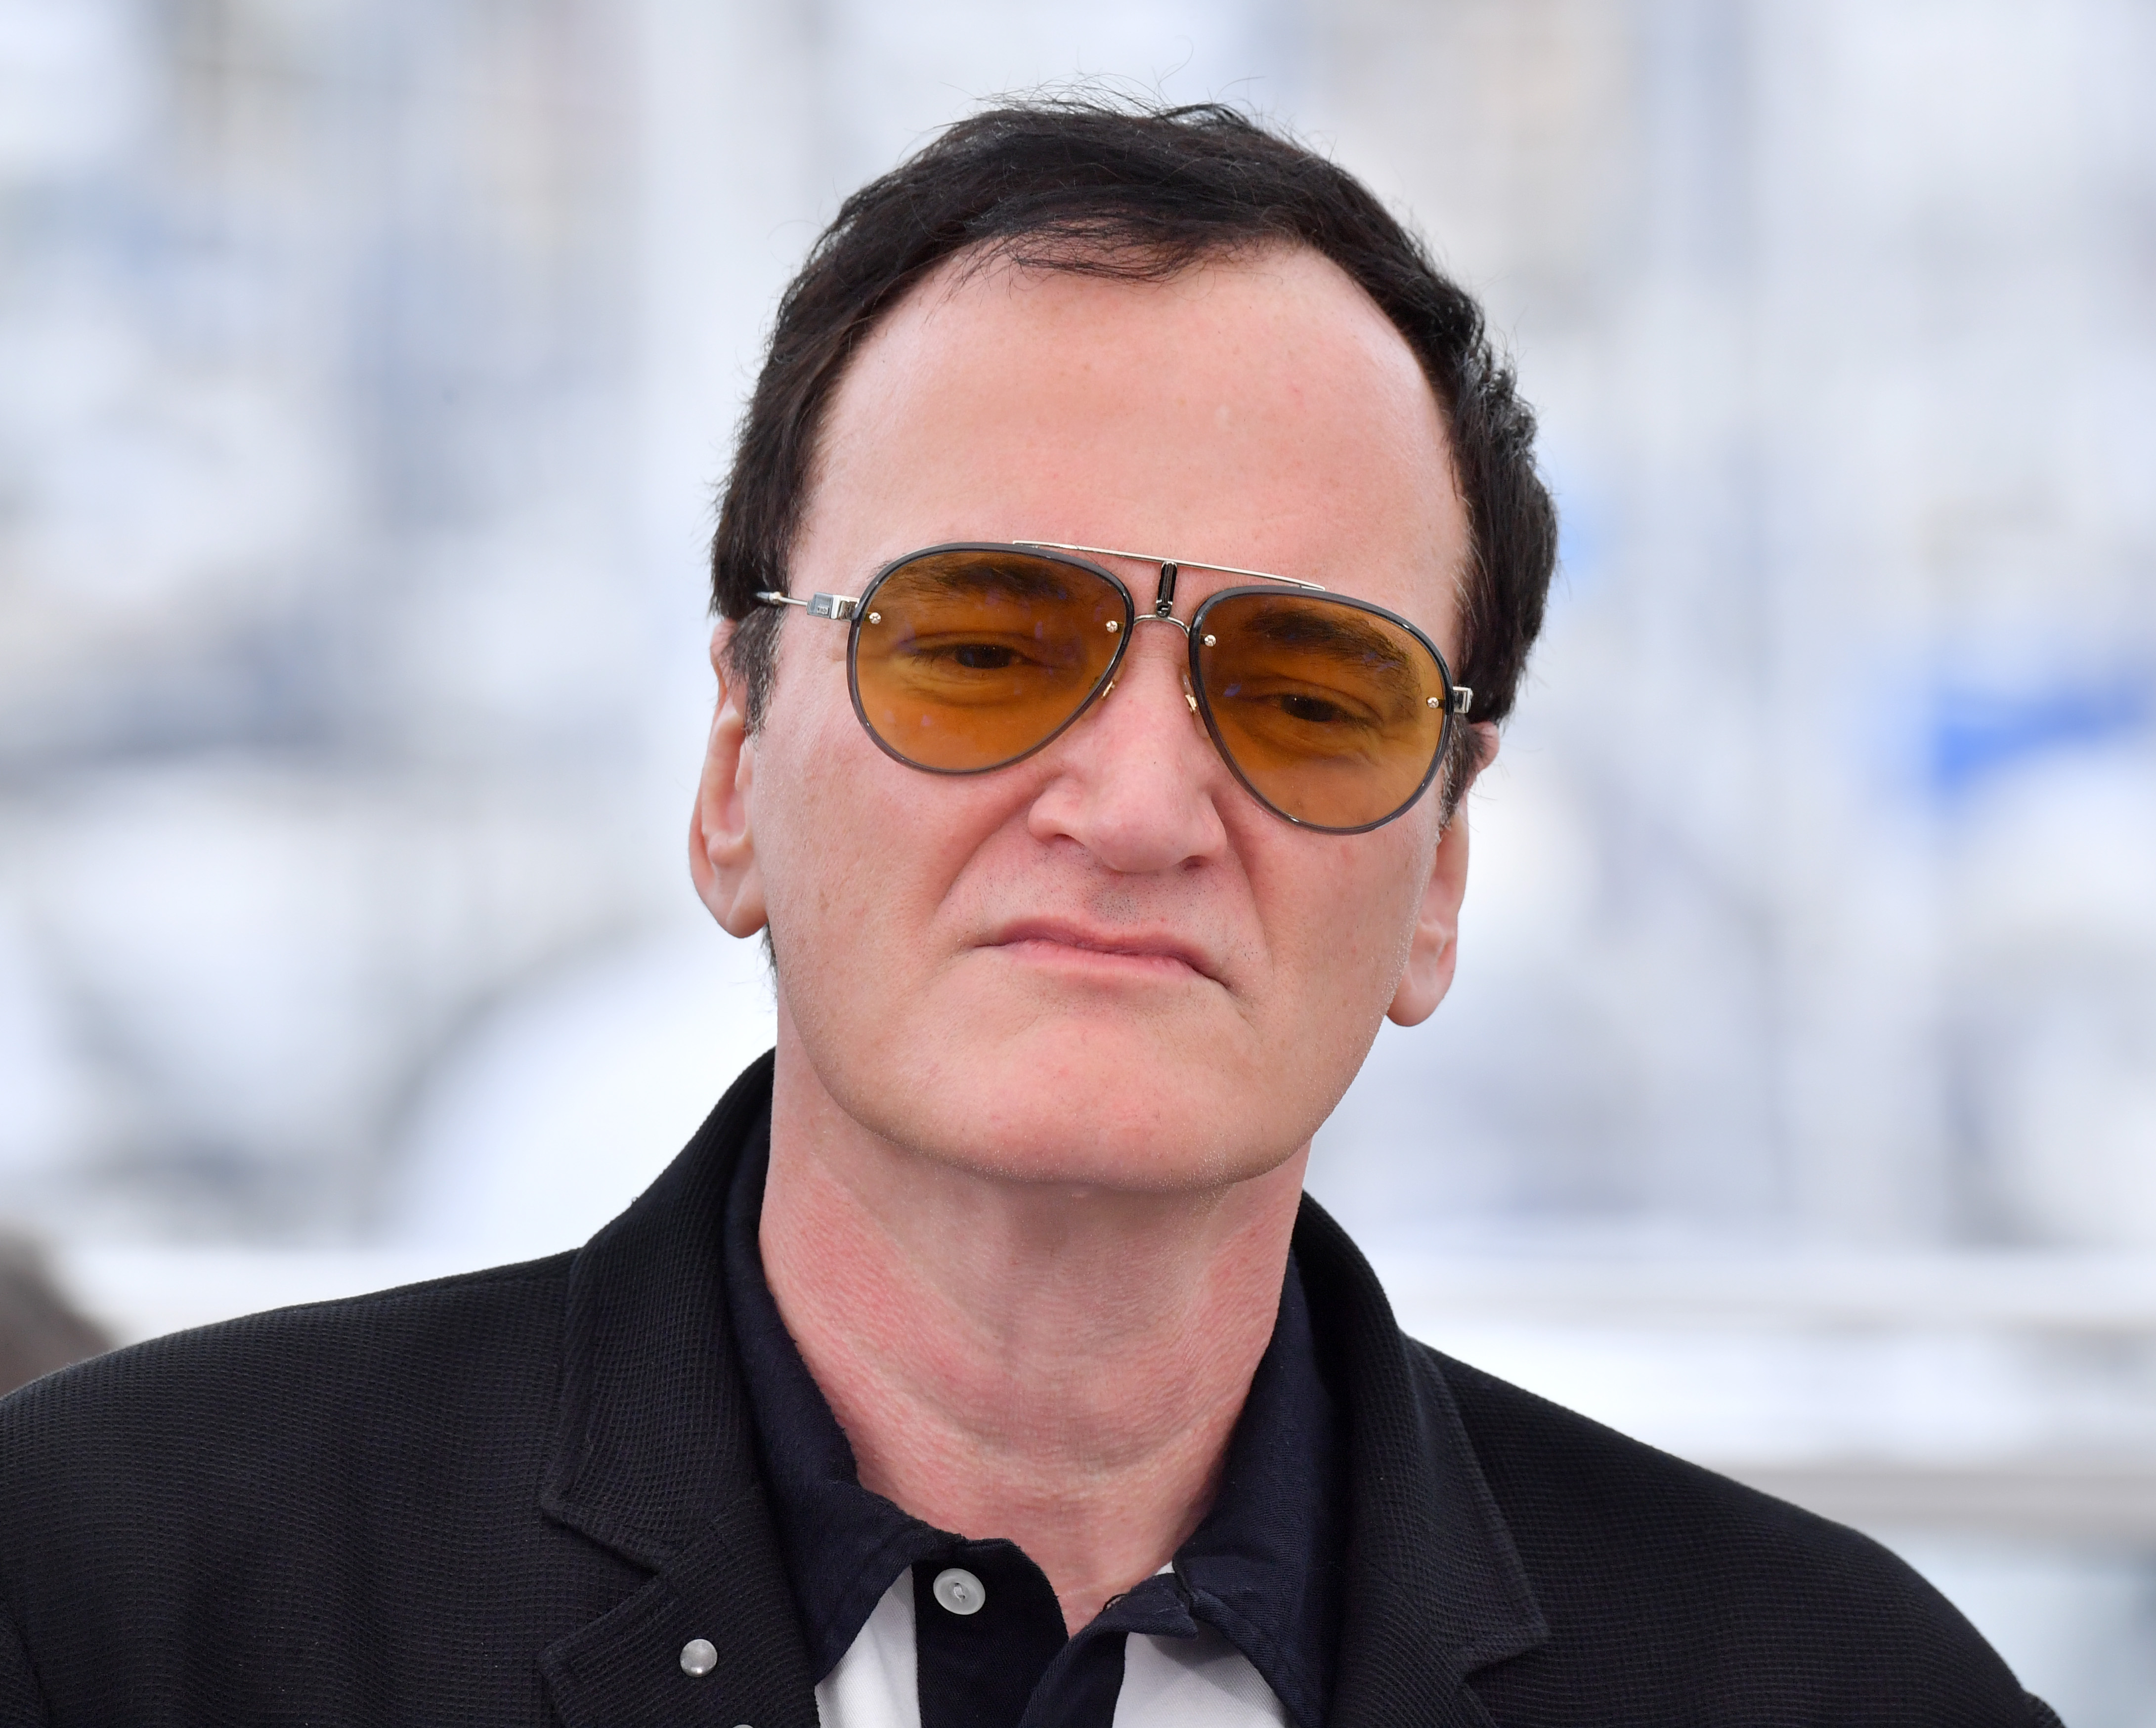 American Man Quentin Tarantino Sunglasses 4362x3497